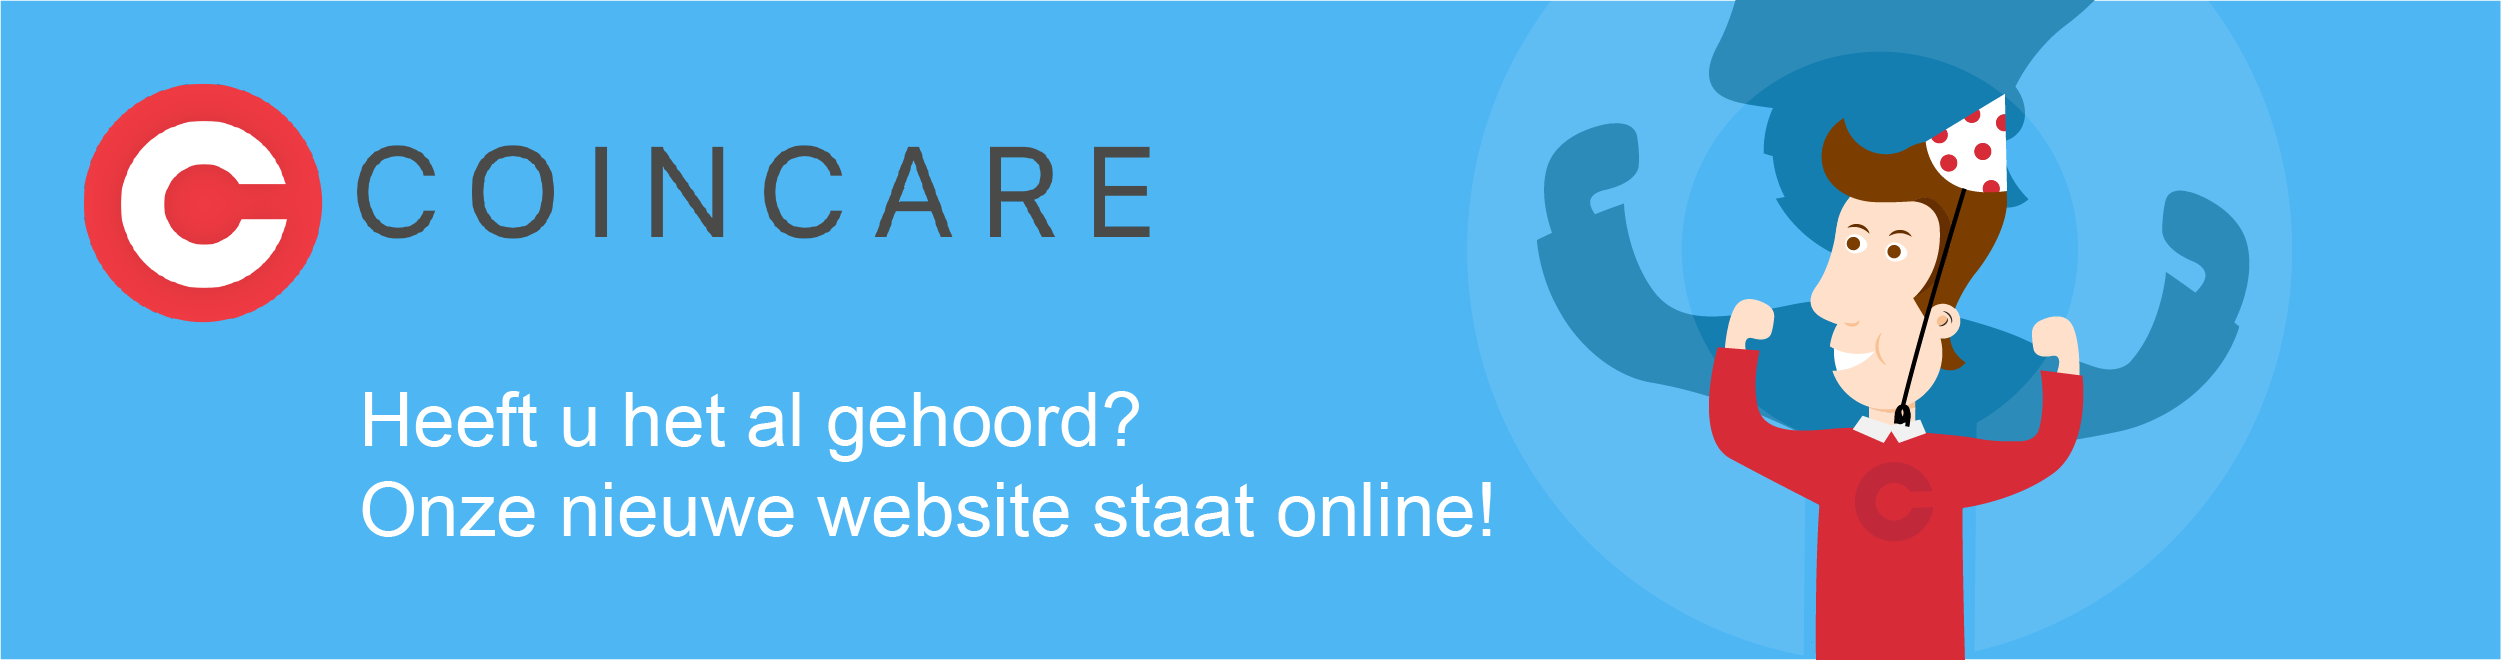 CoinCare website